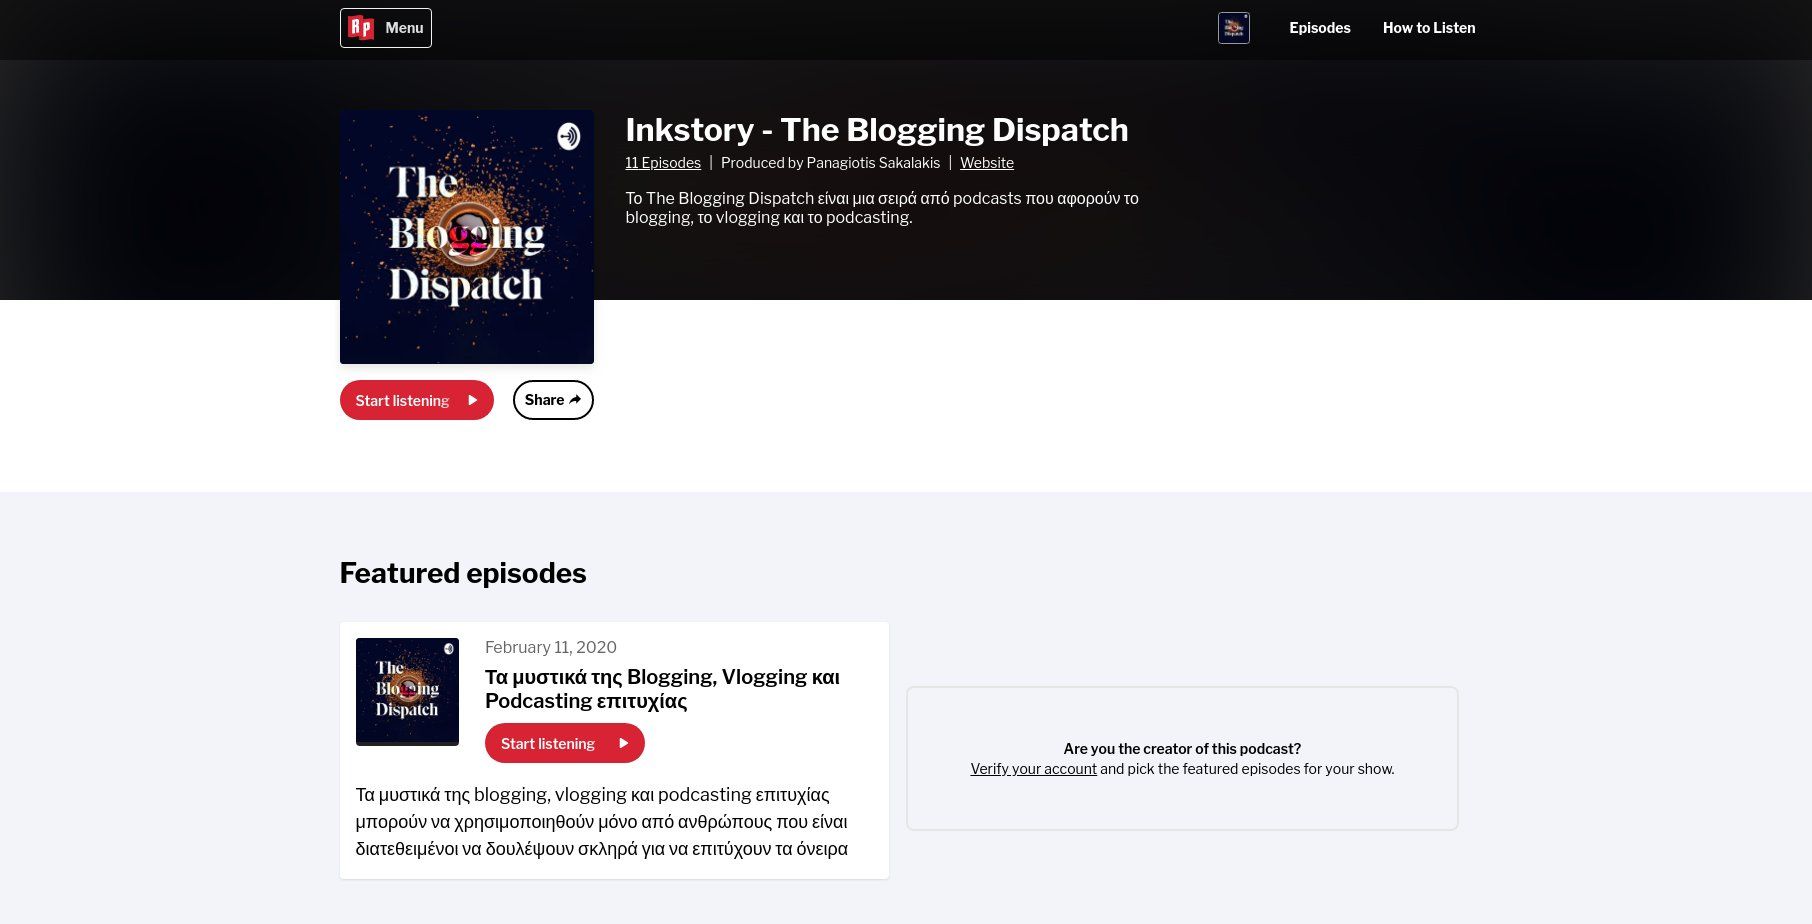 RadioPublic - Οι καλύτερες streaming υπηρεσίες για να ακούς podcast επεισόδια